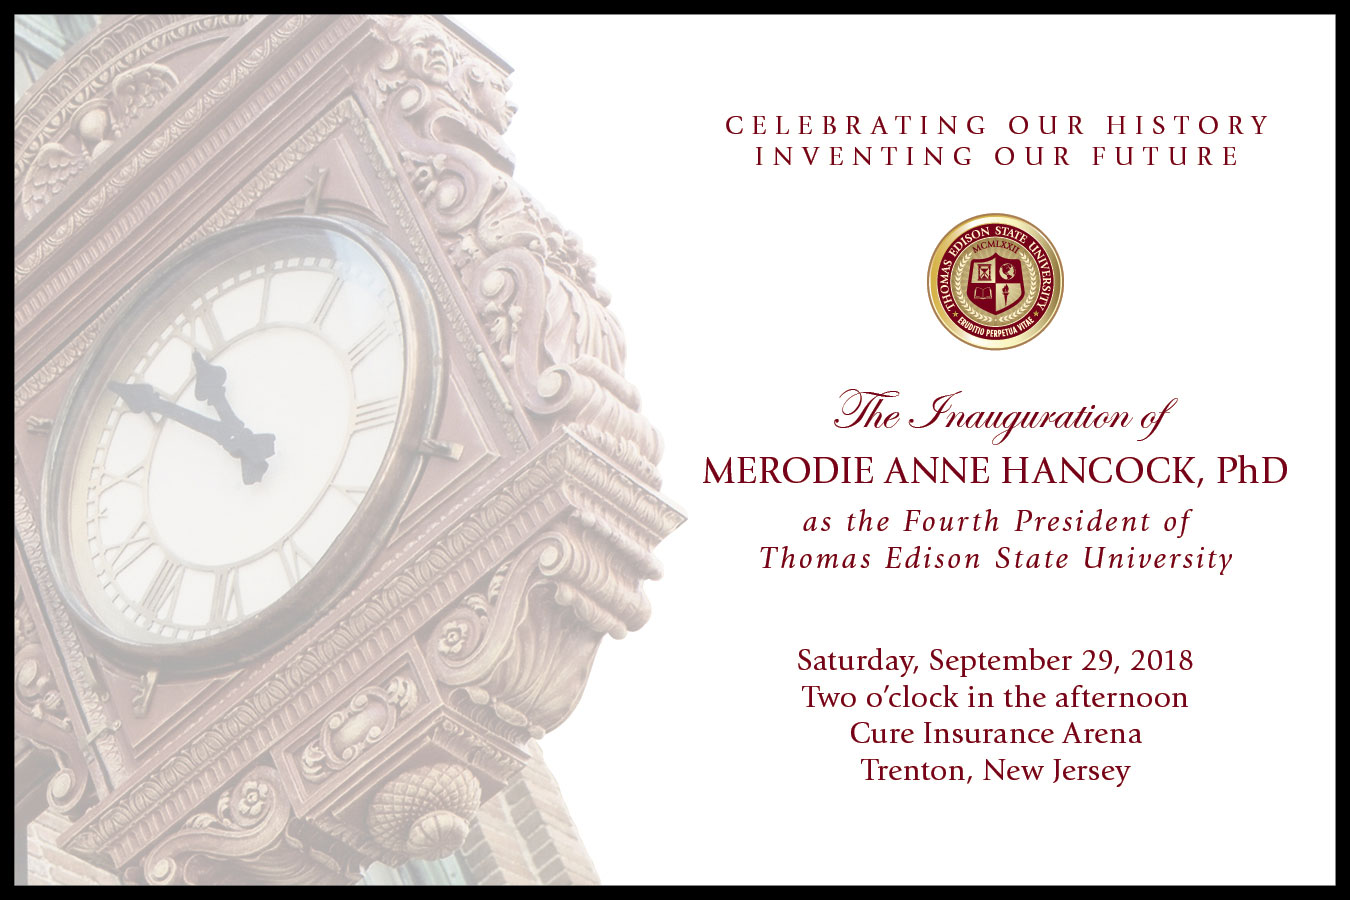 Inauguration of Merodie Anne Hancock, PhD